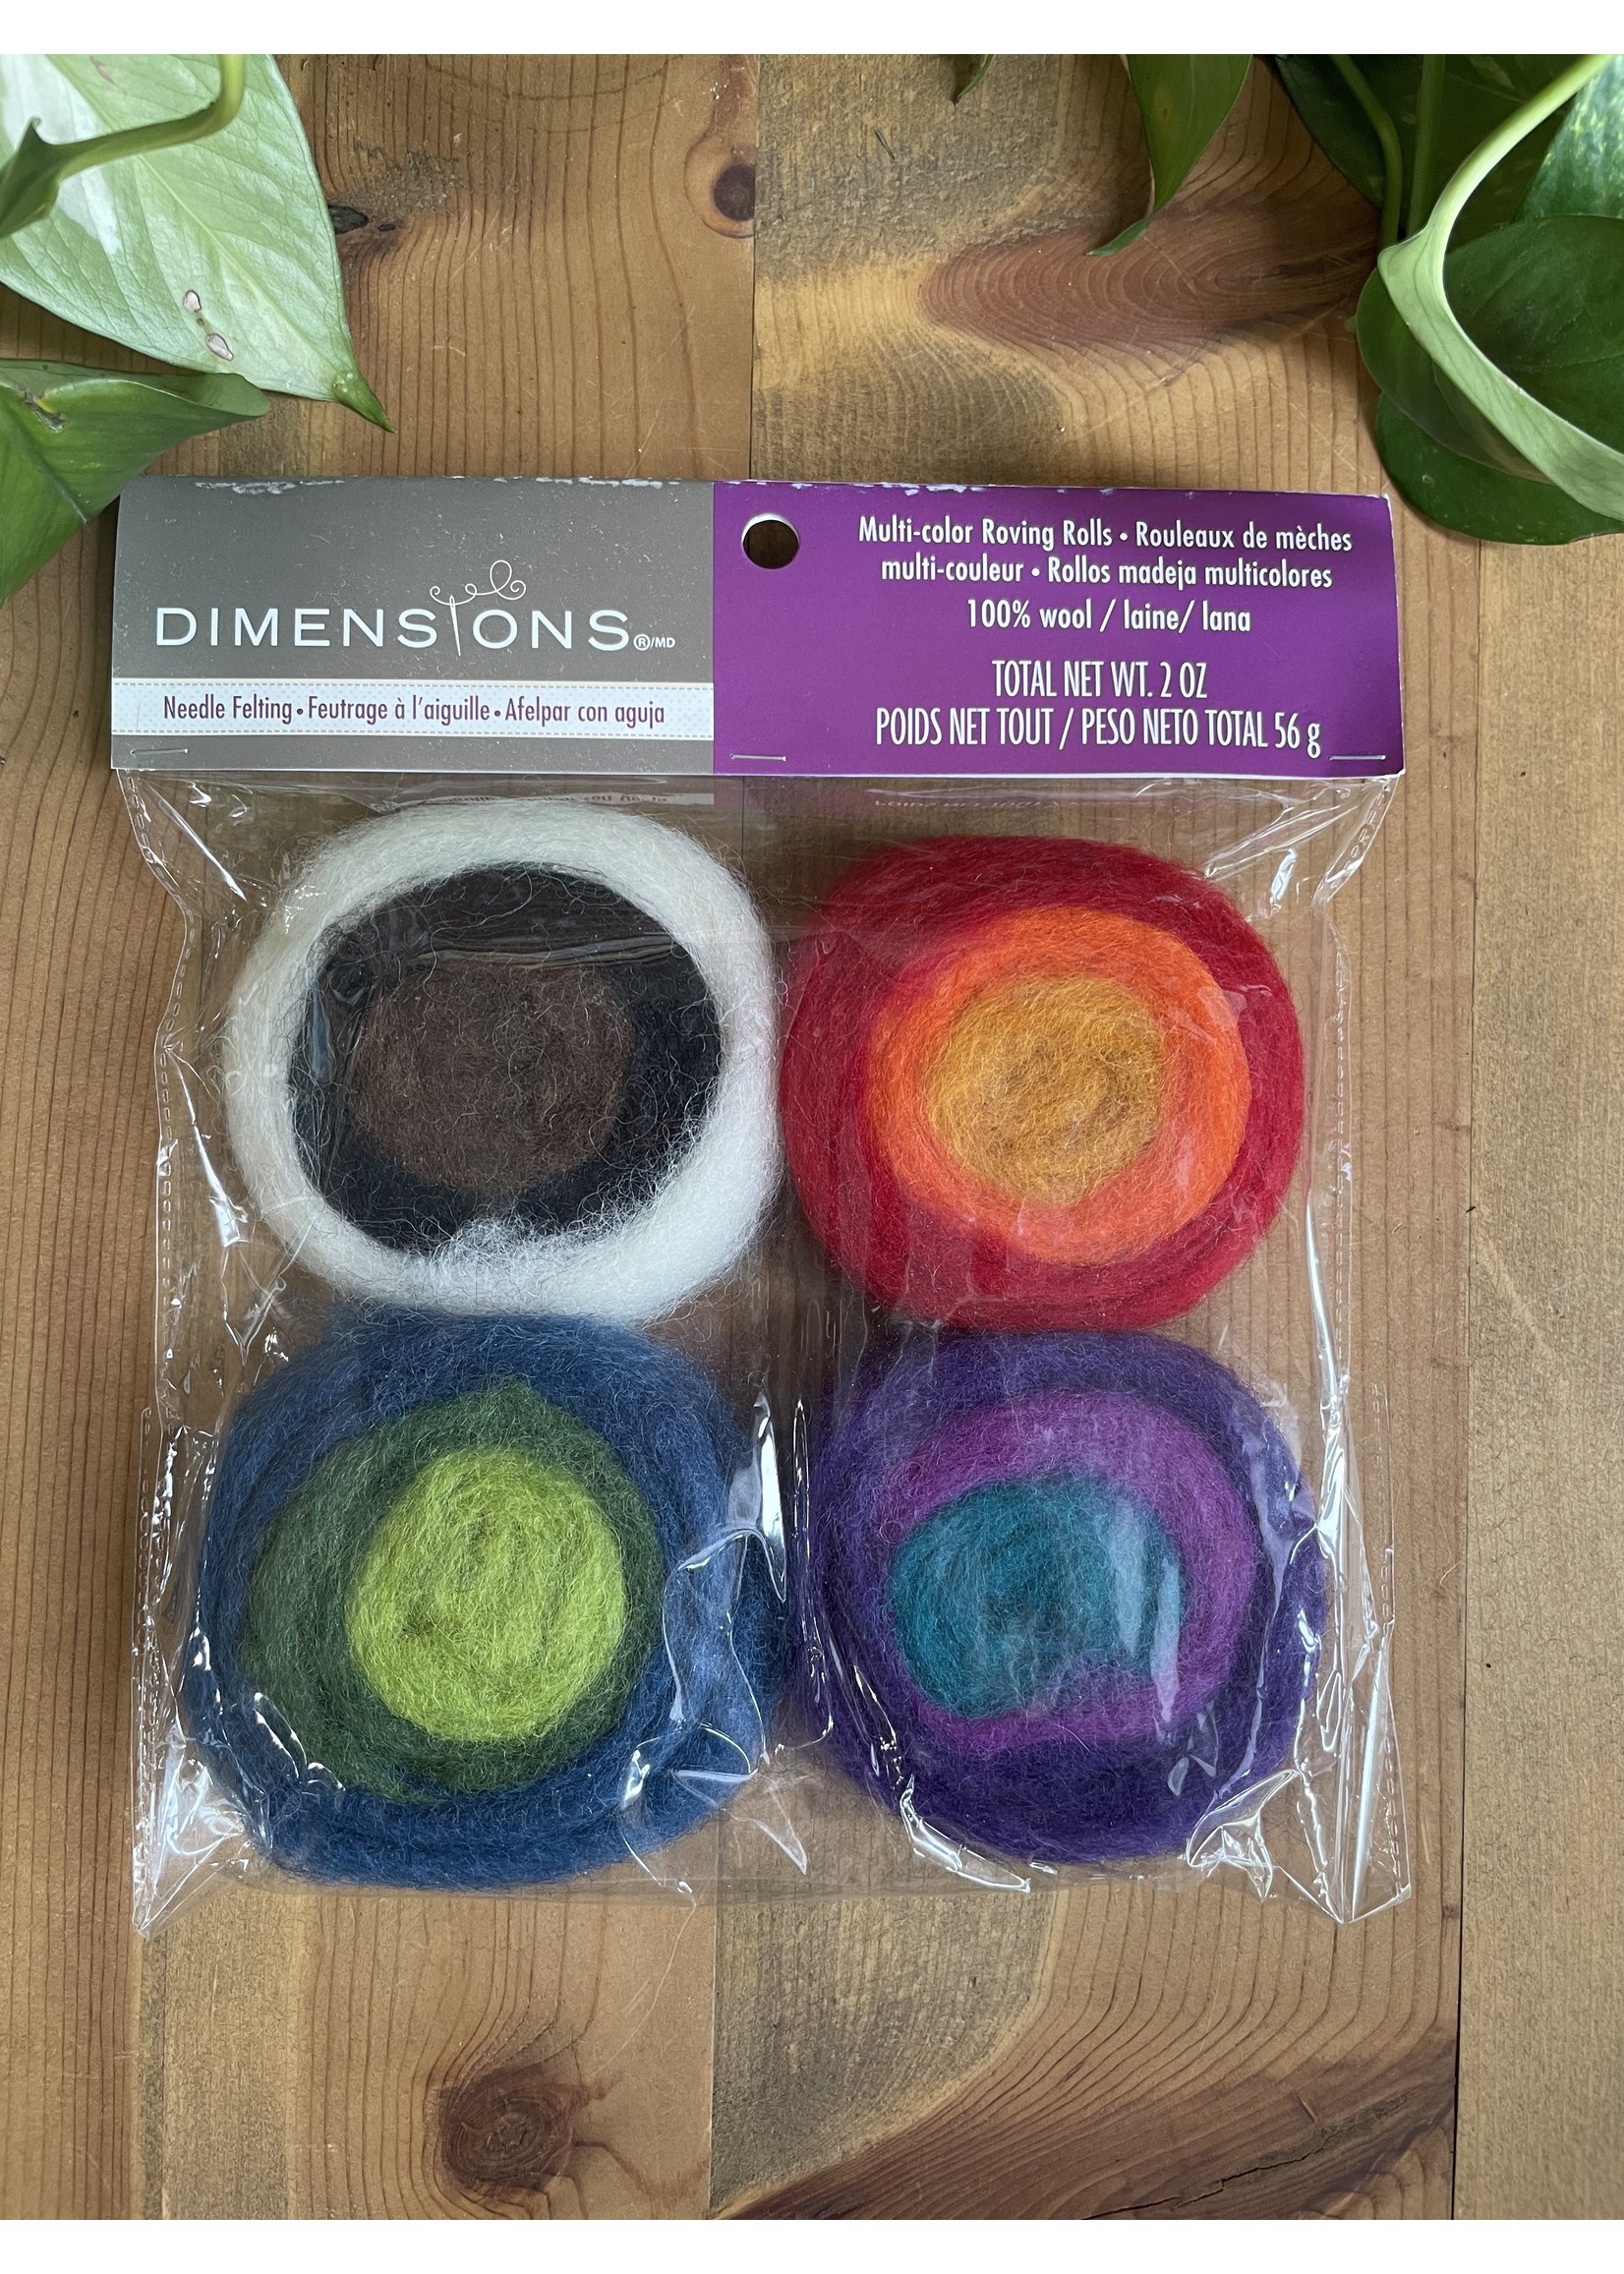 Dimensions multi color roving rolls